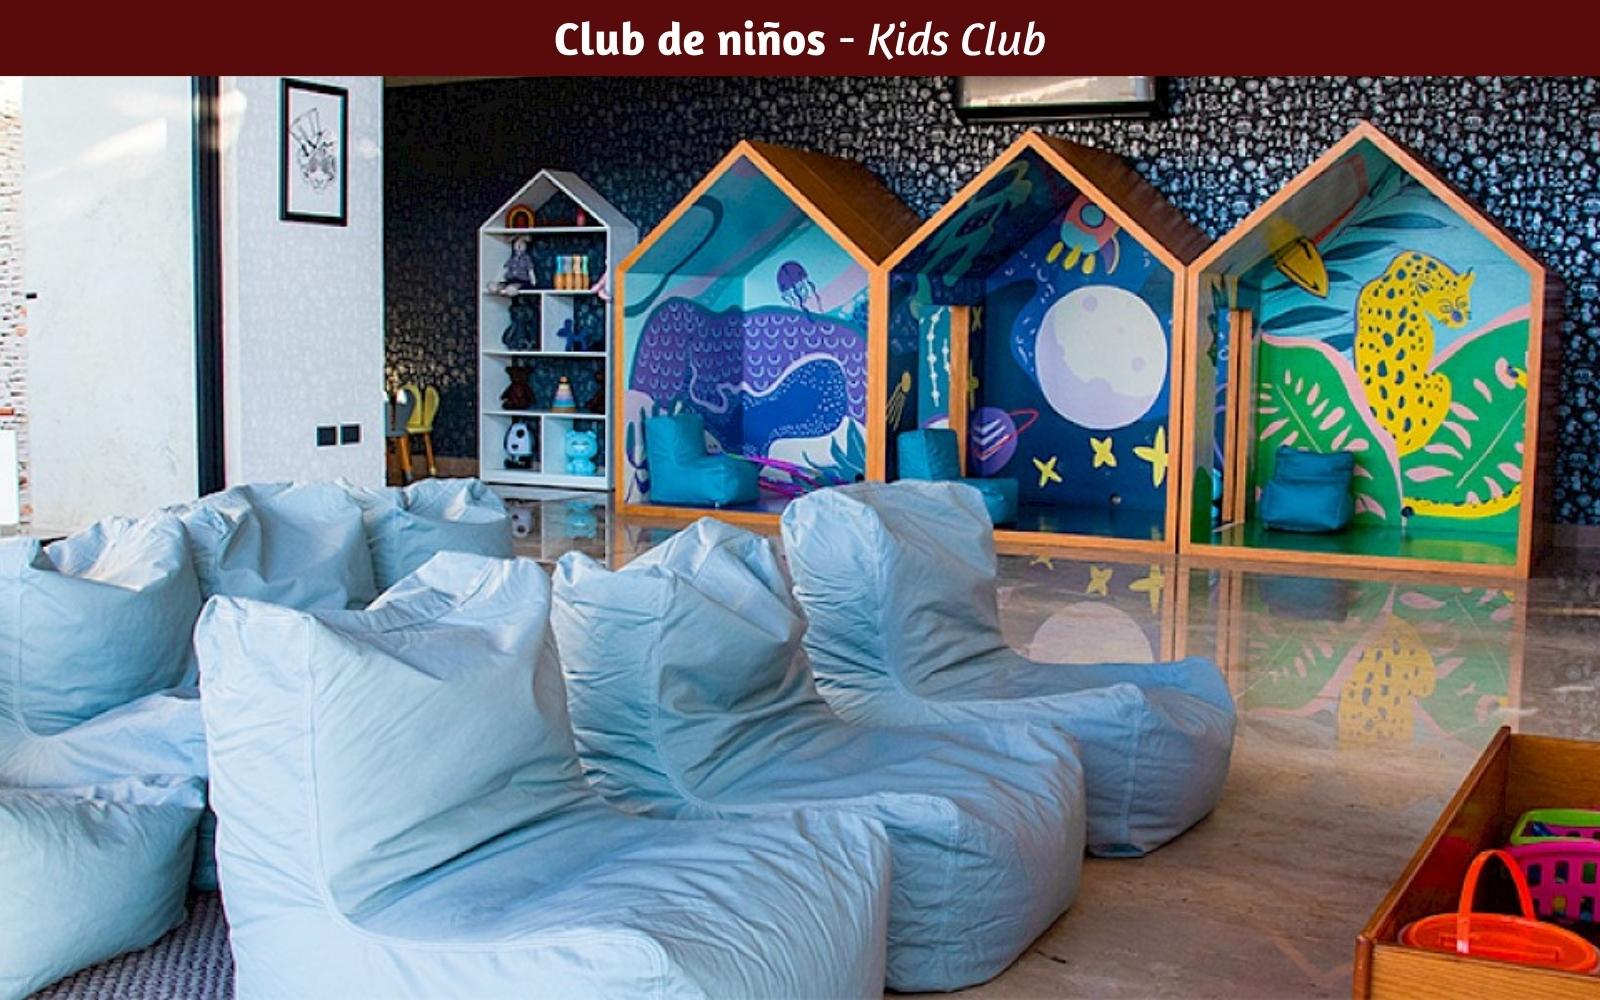 Casa de dos pisos con alberca privada, en Residencial privado con casa club, en venta Mérida